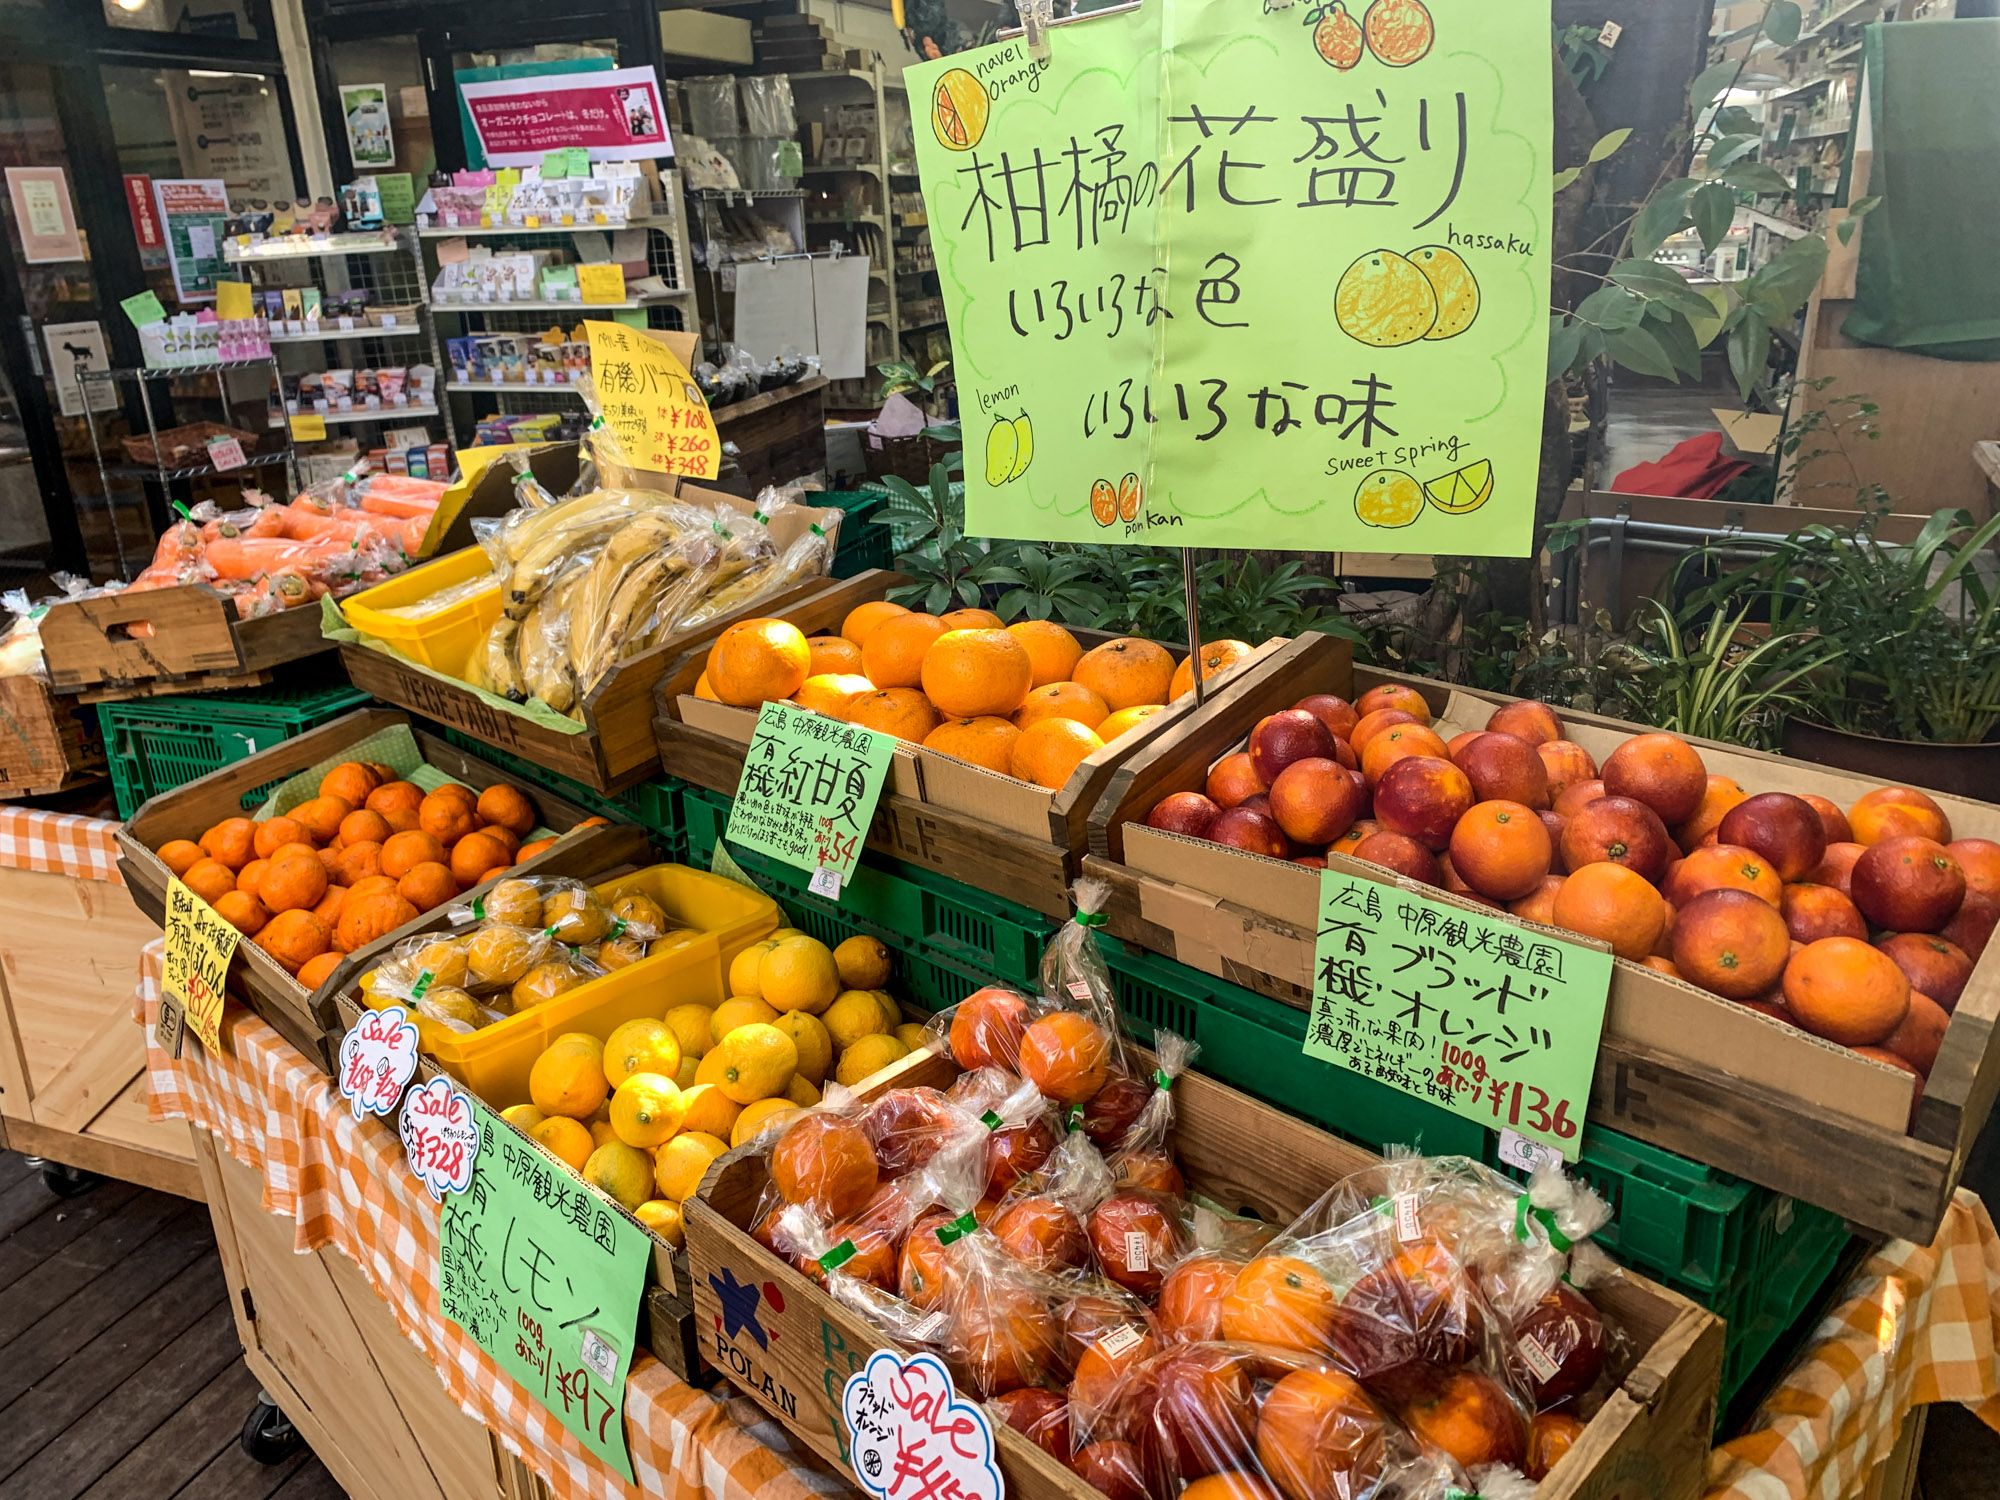 Organic carrots in Tokyo